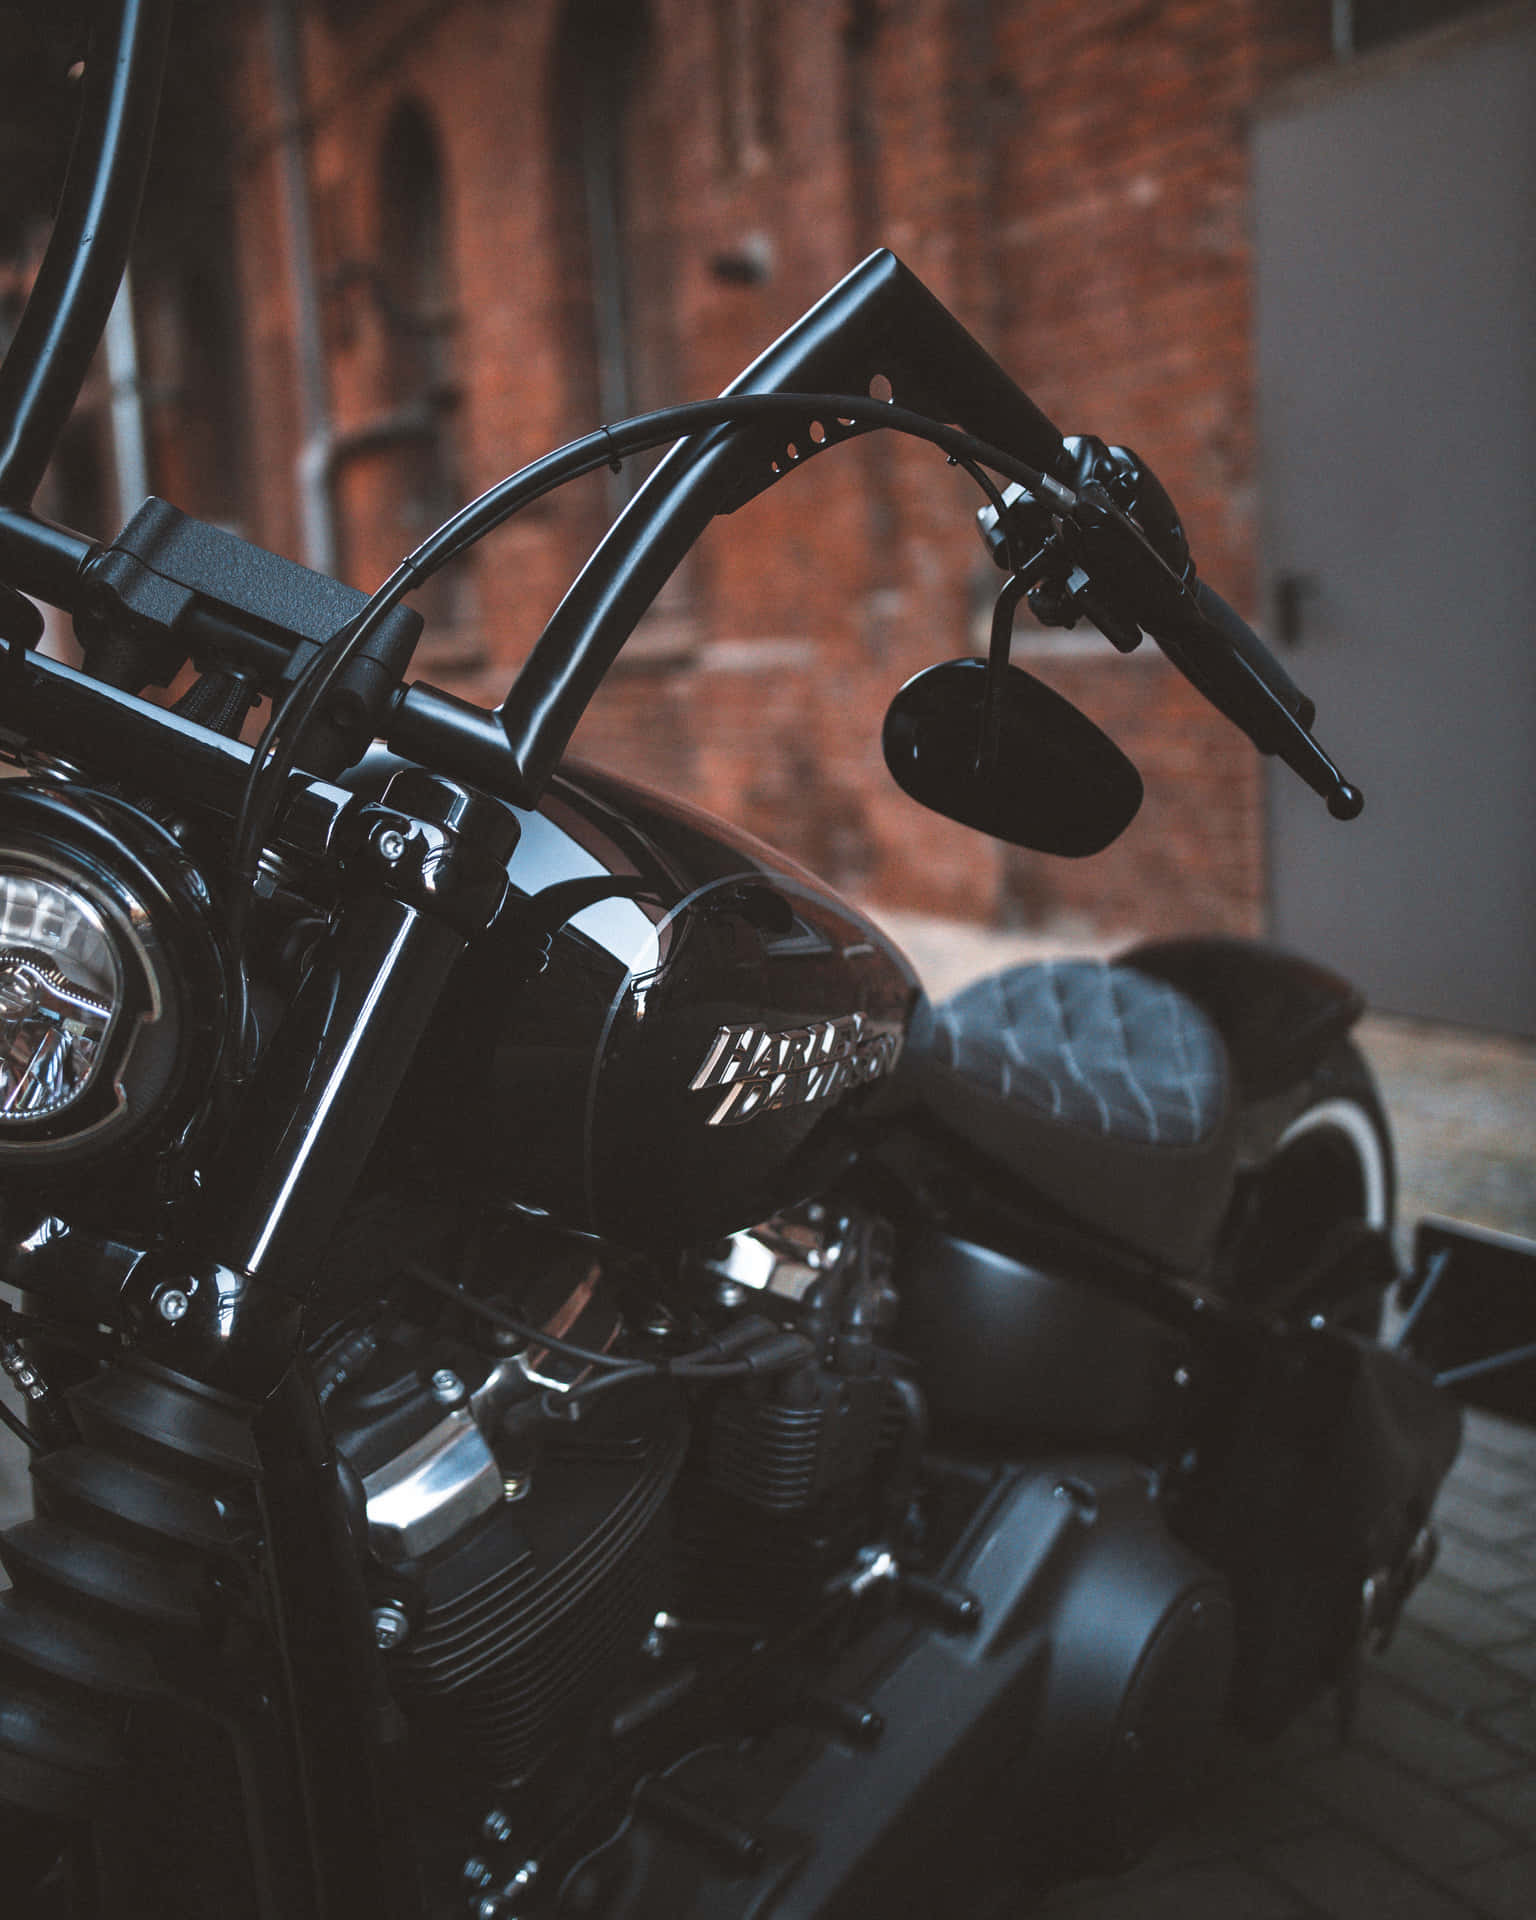 Motocicletanegra Harley Davidson Hd Fondo de pantalla